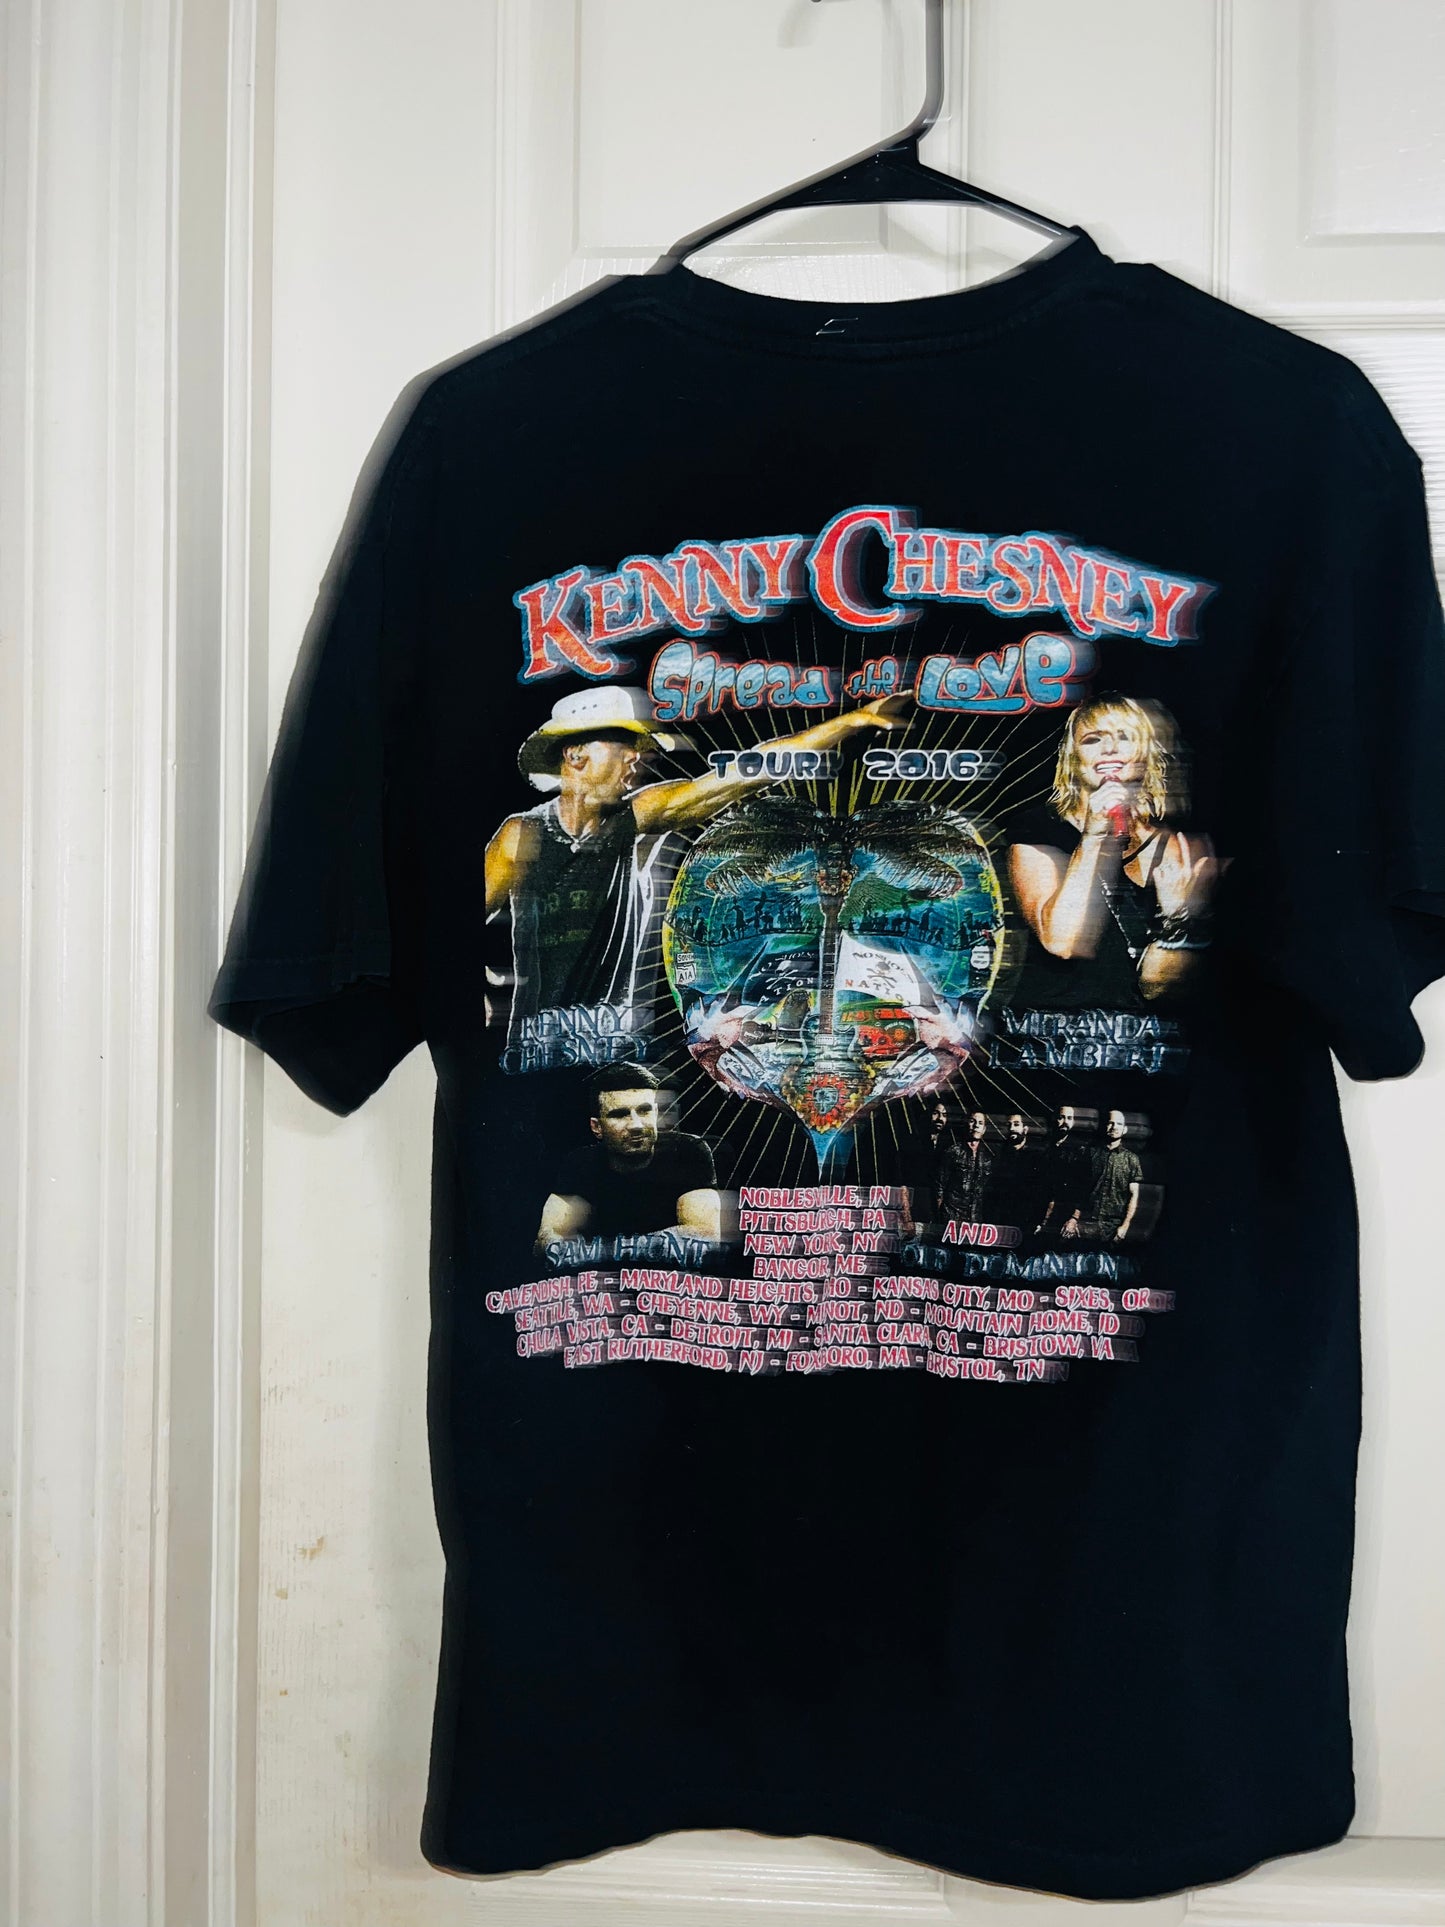 Vintage Kenny Chesney/Miranda Lambert/Sam Hunt 2016 Tour